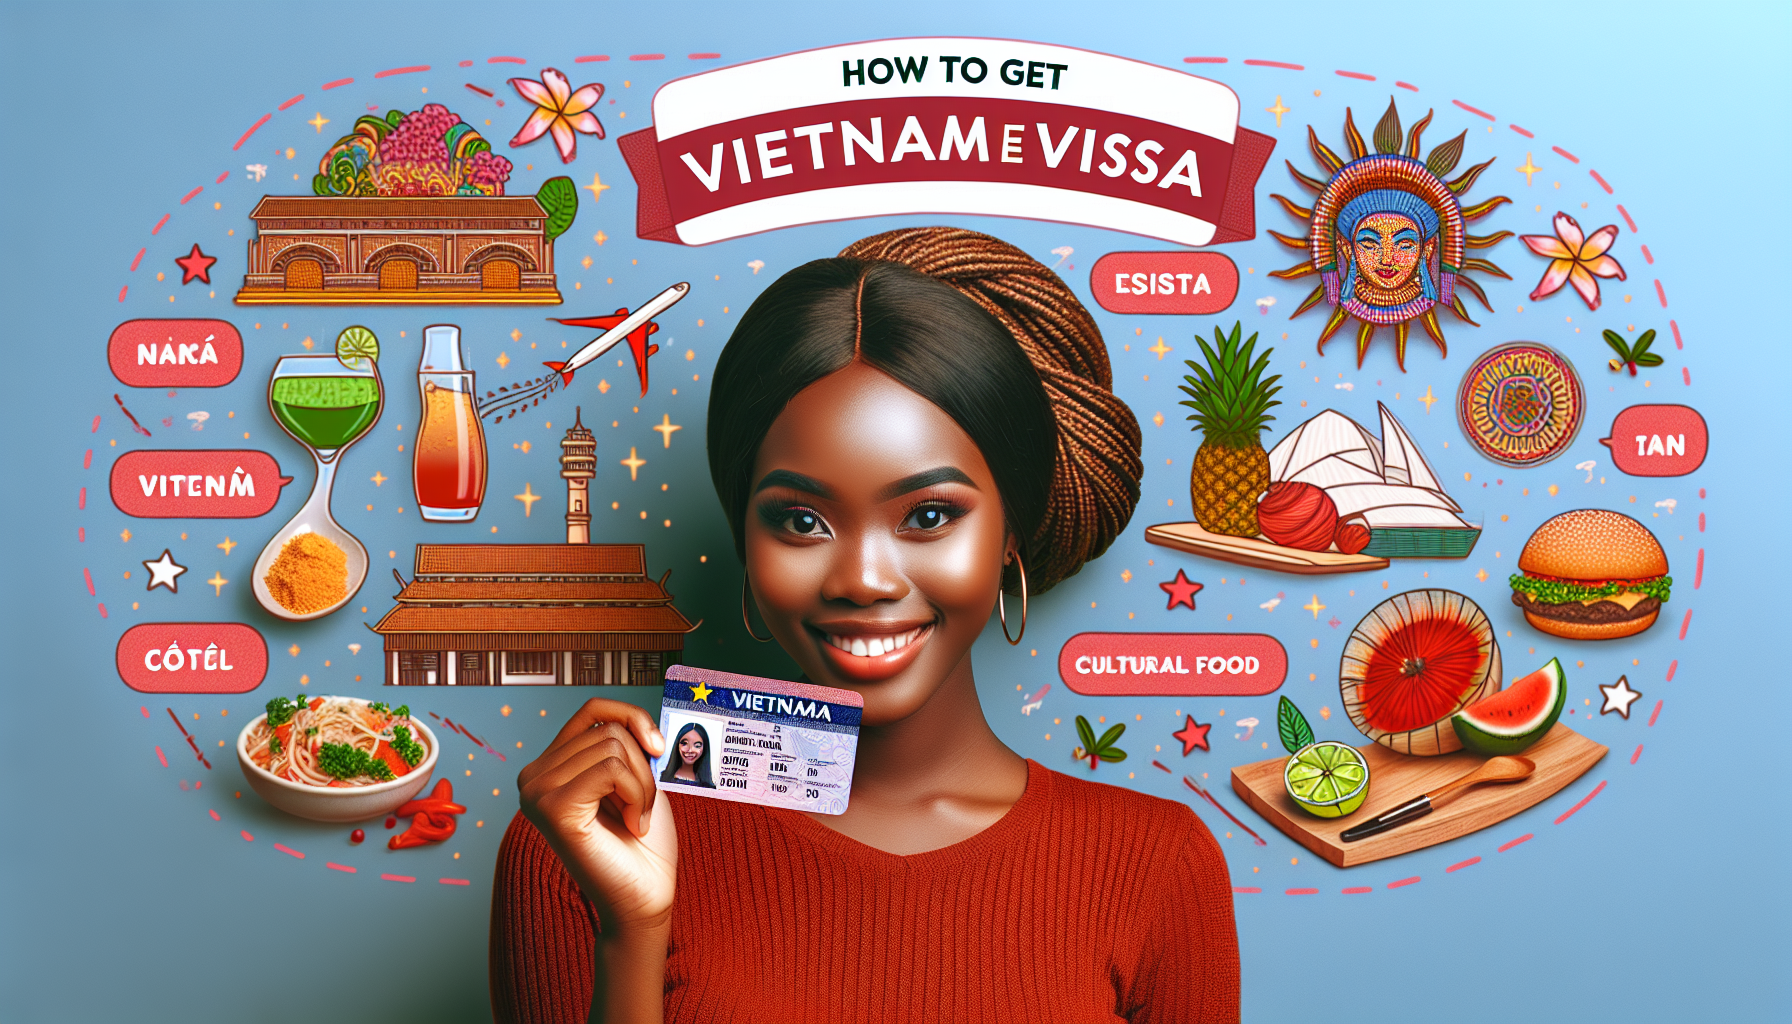 Vietnam Evisa for Citizens from Port-au-Prince